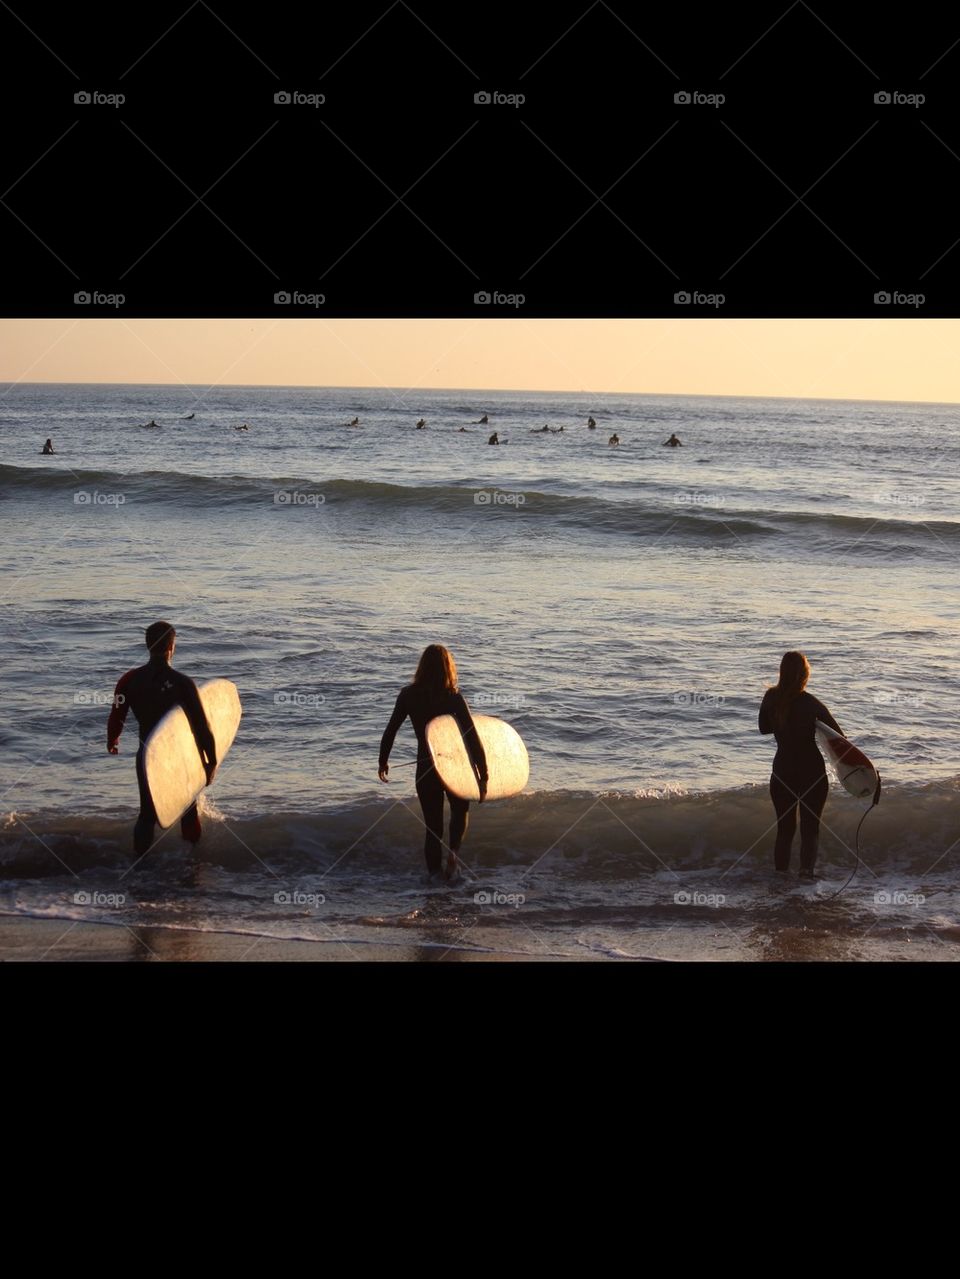 Sunset surf session